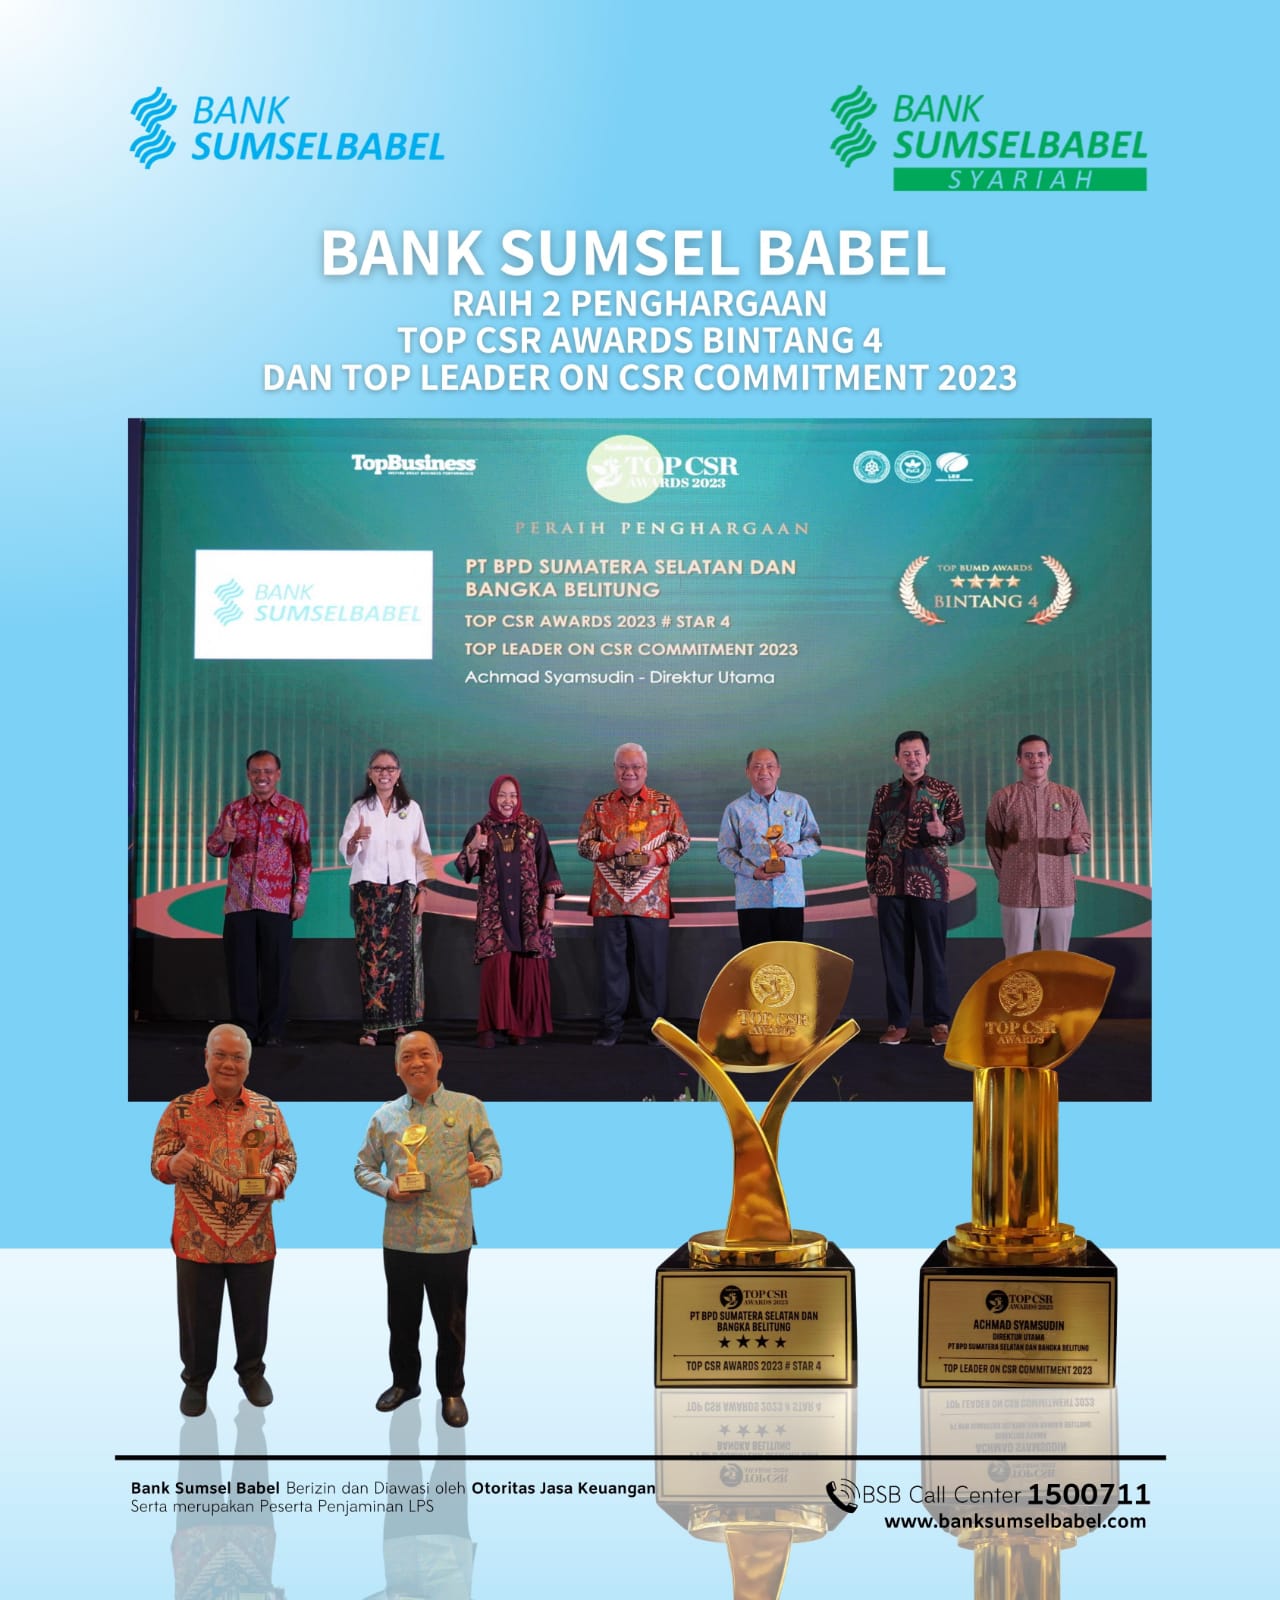 BANK SUMSEL BABEL RAIH TOP CSR AWARD 2023